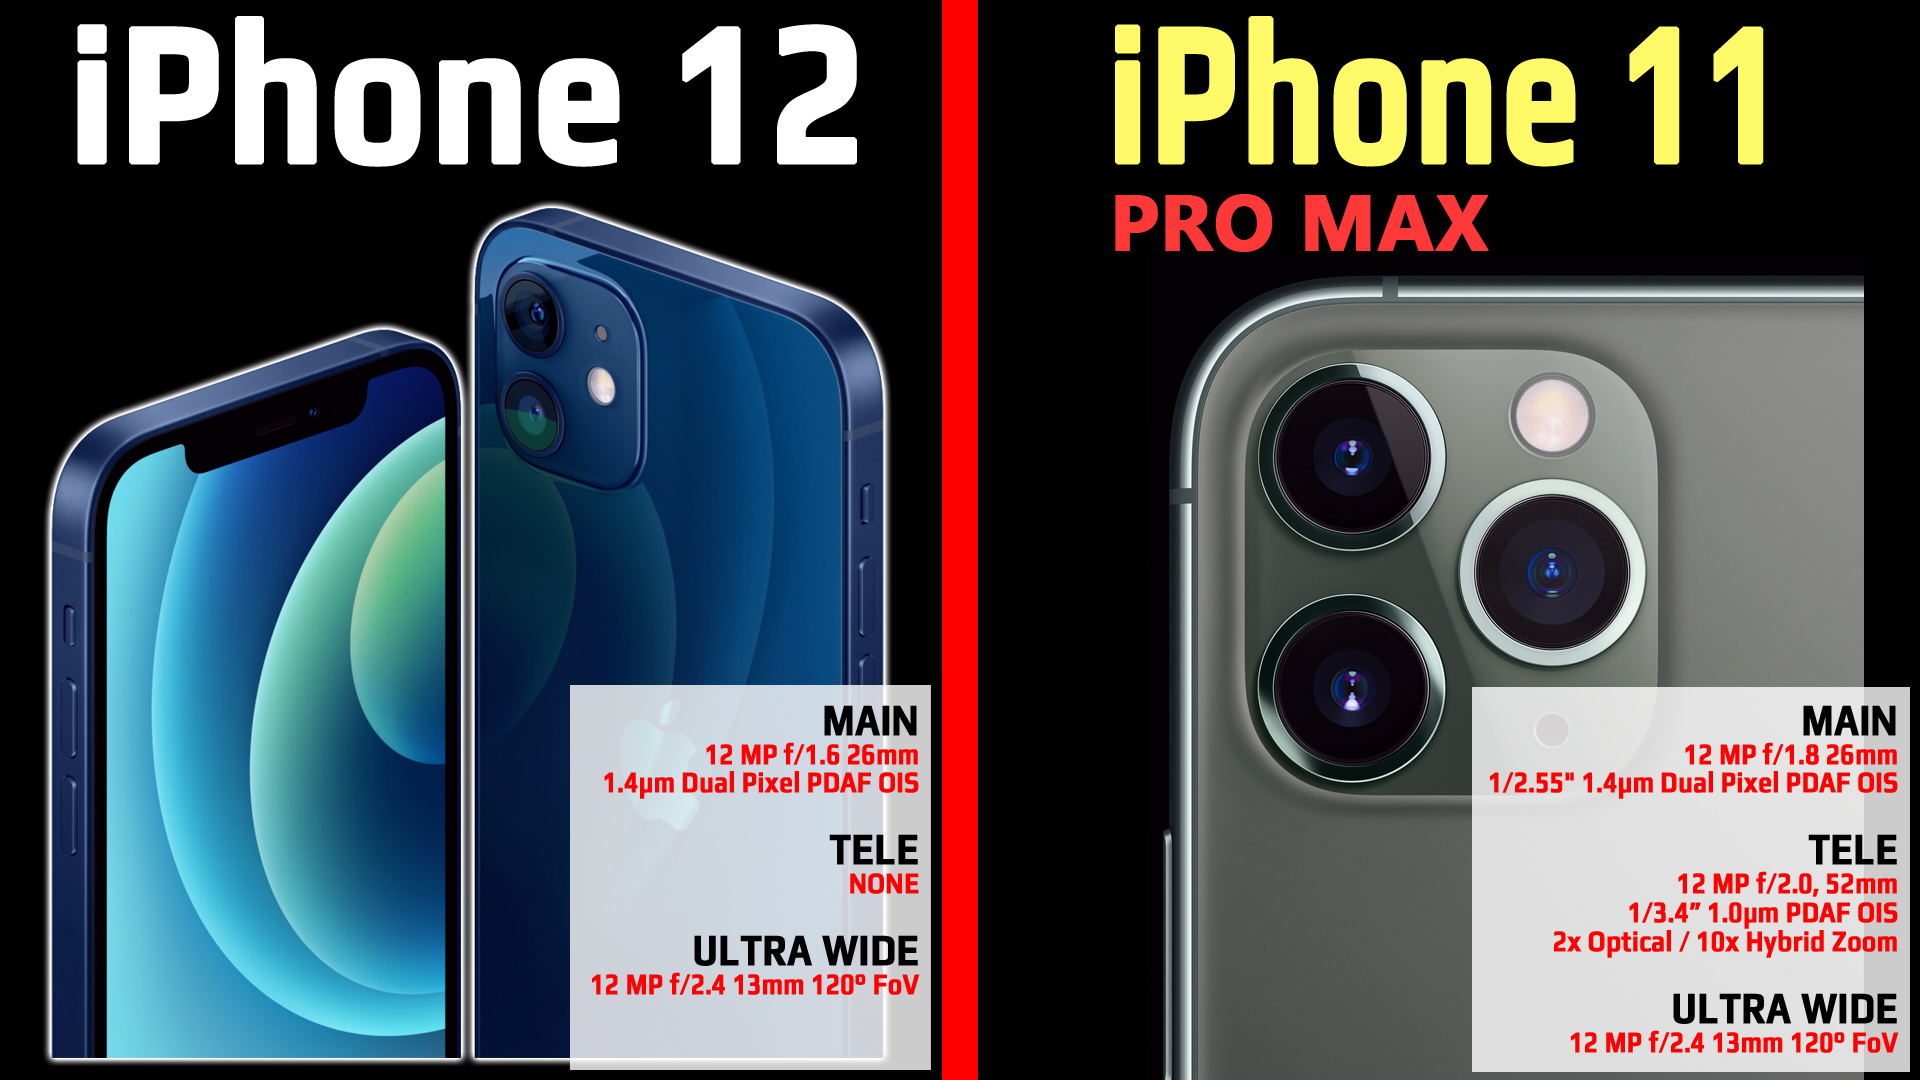 iPhone 12 vs iPhone 11 Pro Max Main Camera Test Photo Quality